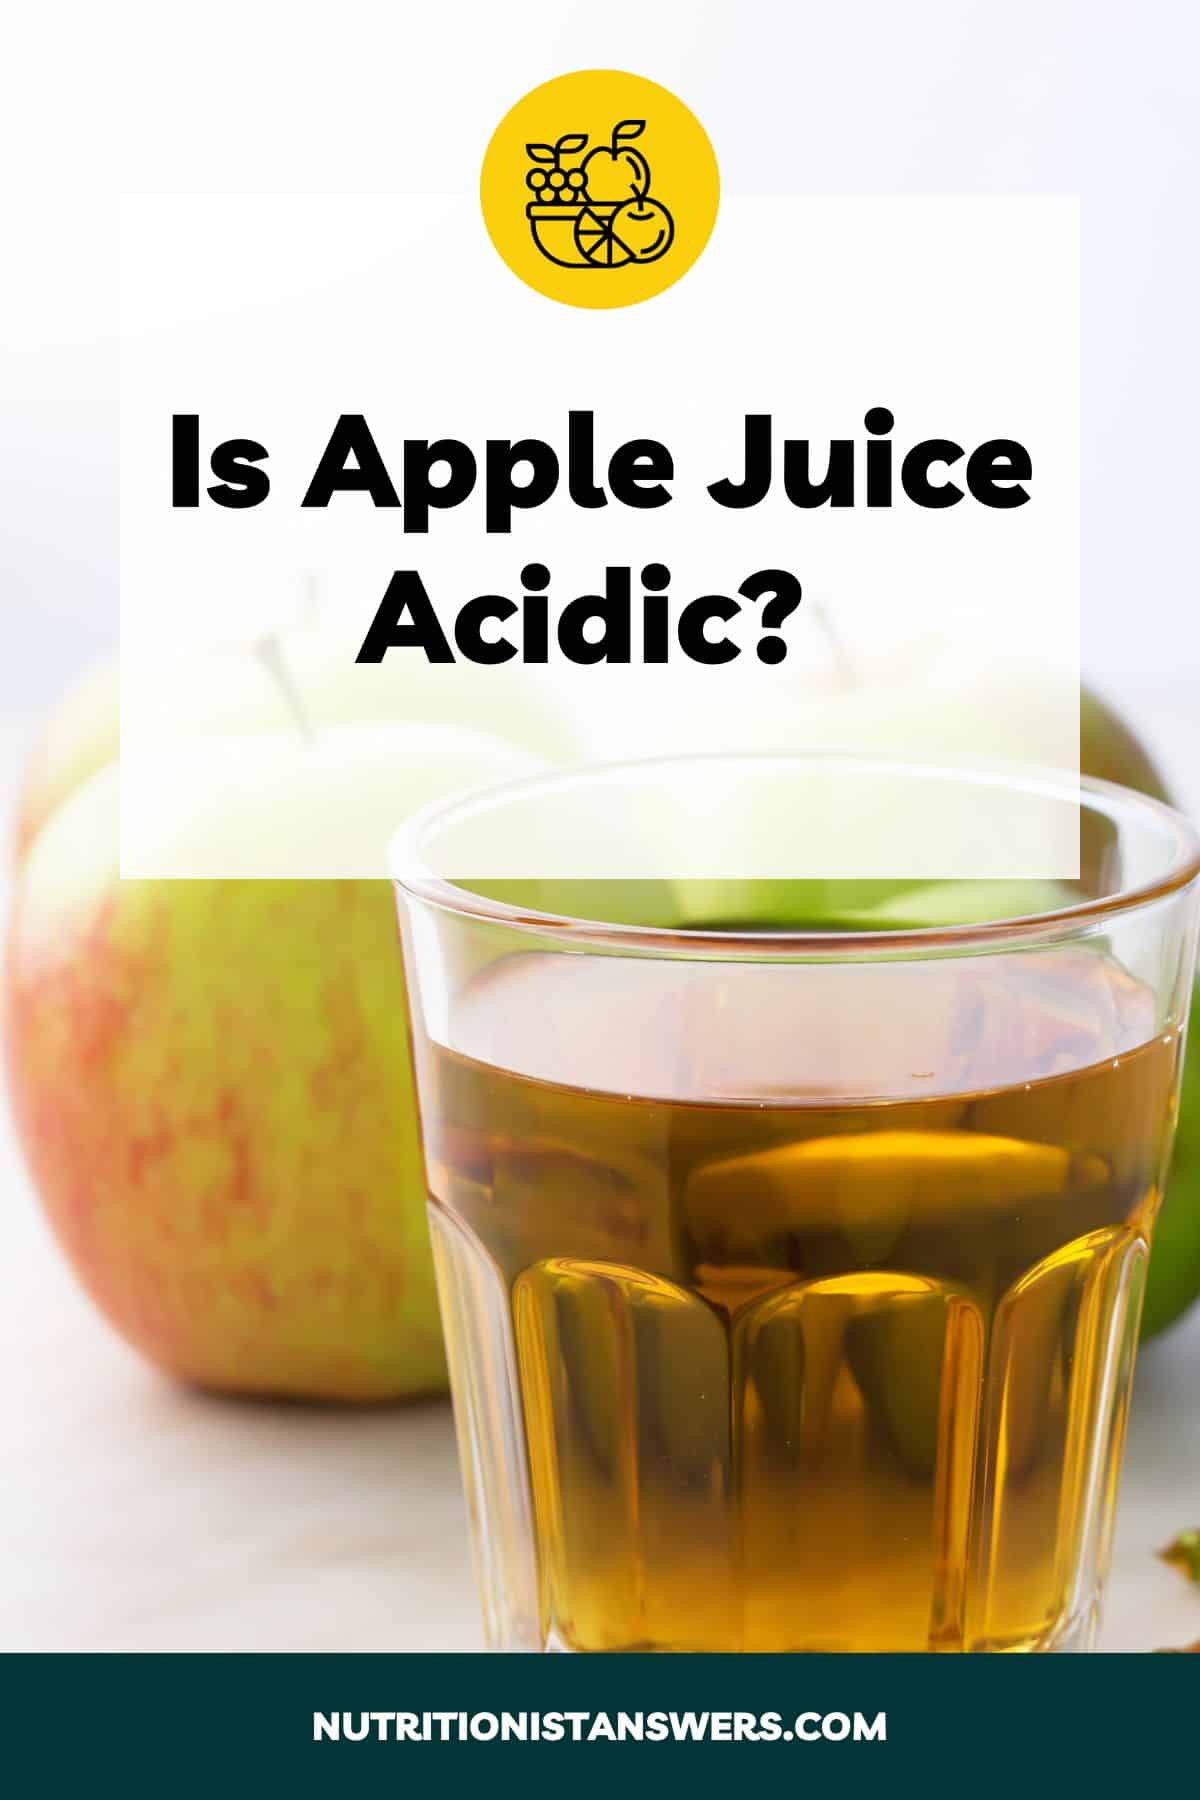 Is Apple Juice Acidic?